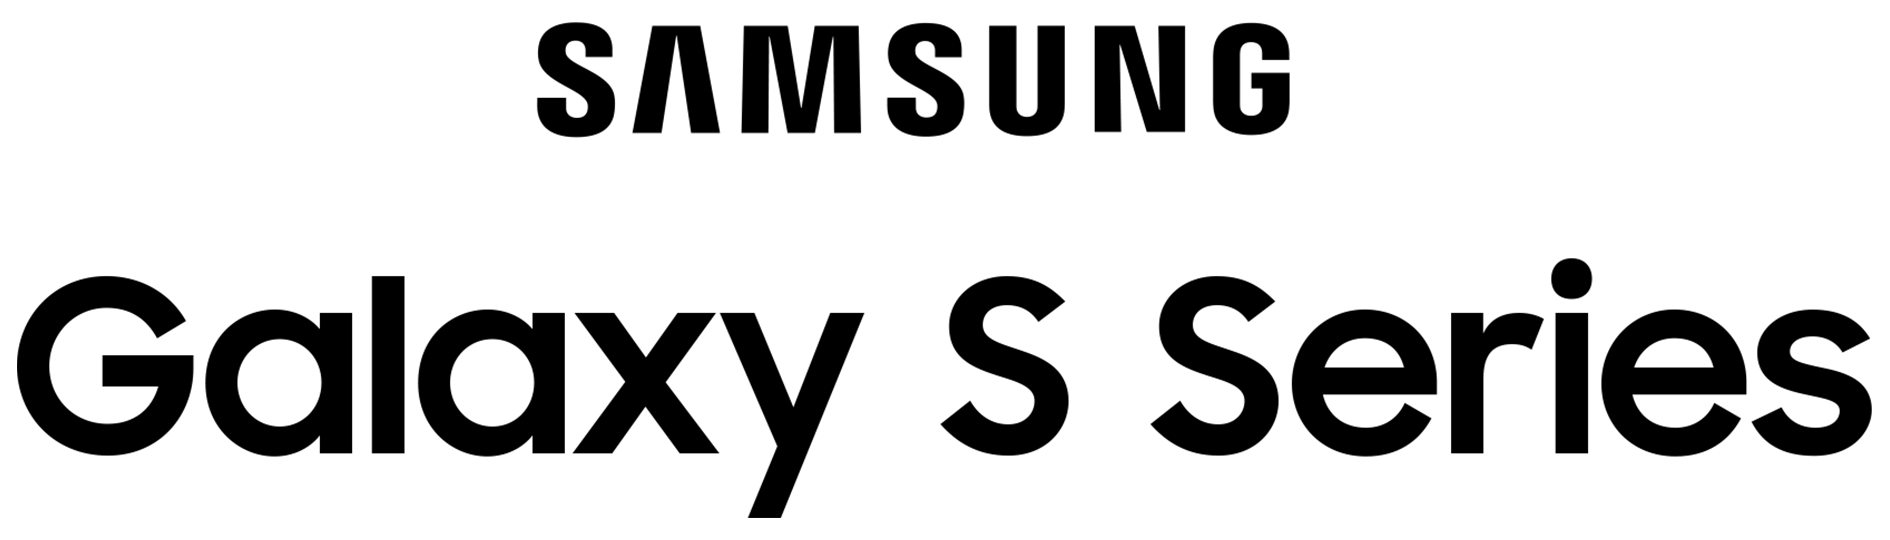 samsung-galaxy-s-series-logo